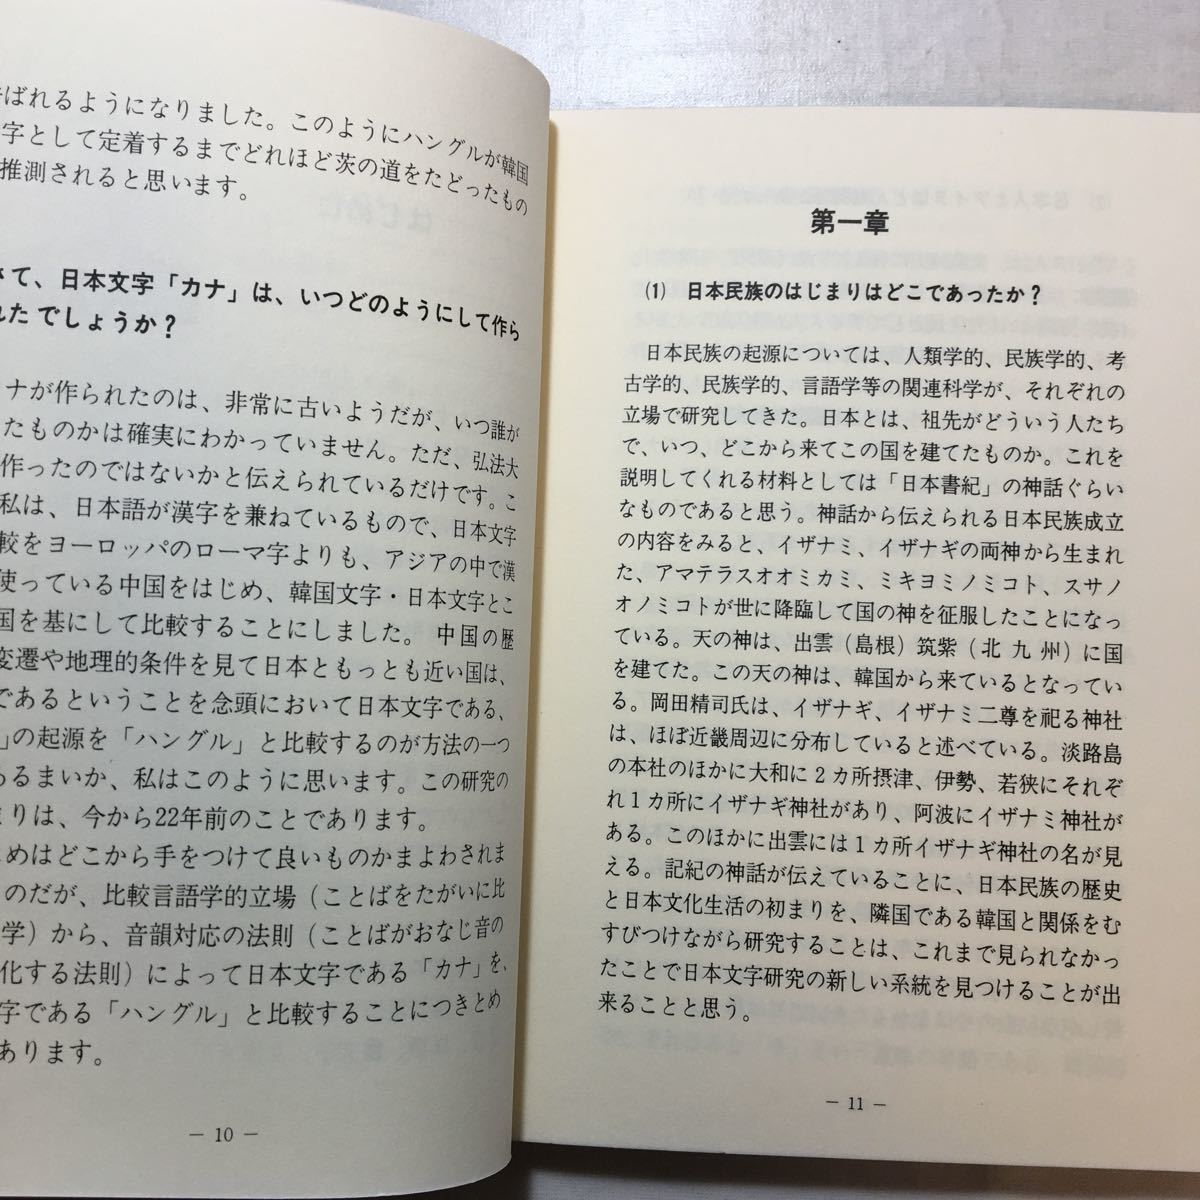 zaa-256♪ハングルとカナは姉妹文字である　崔灌植(著)　1985/1/1　ソウル交通社(発行)